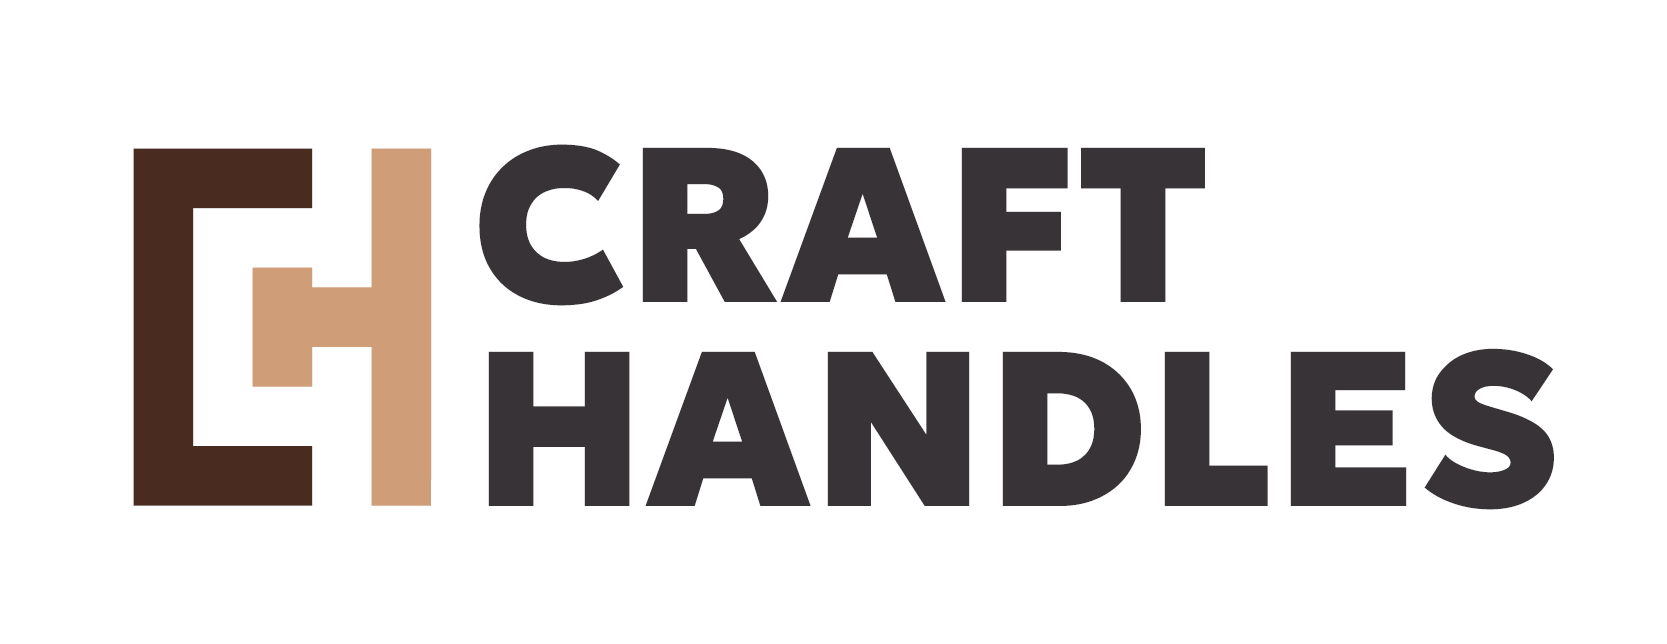 Craft handles